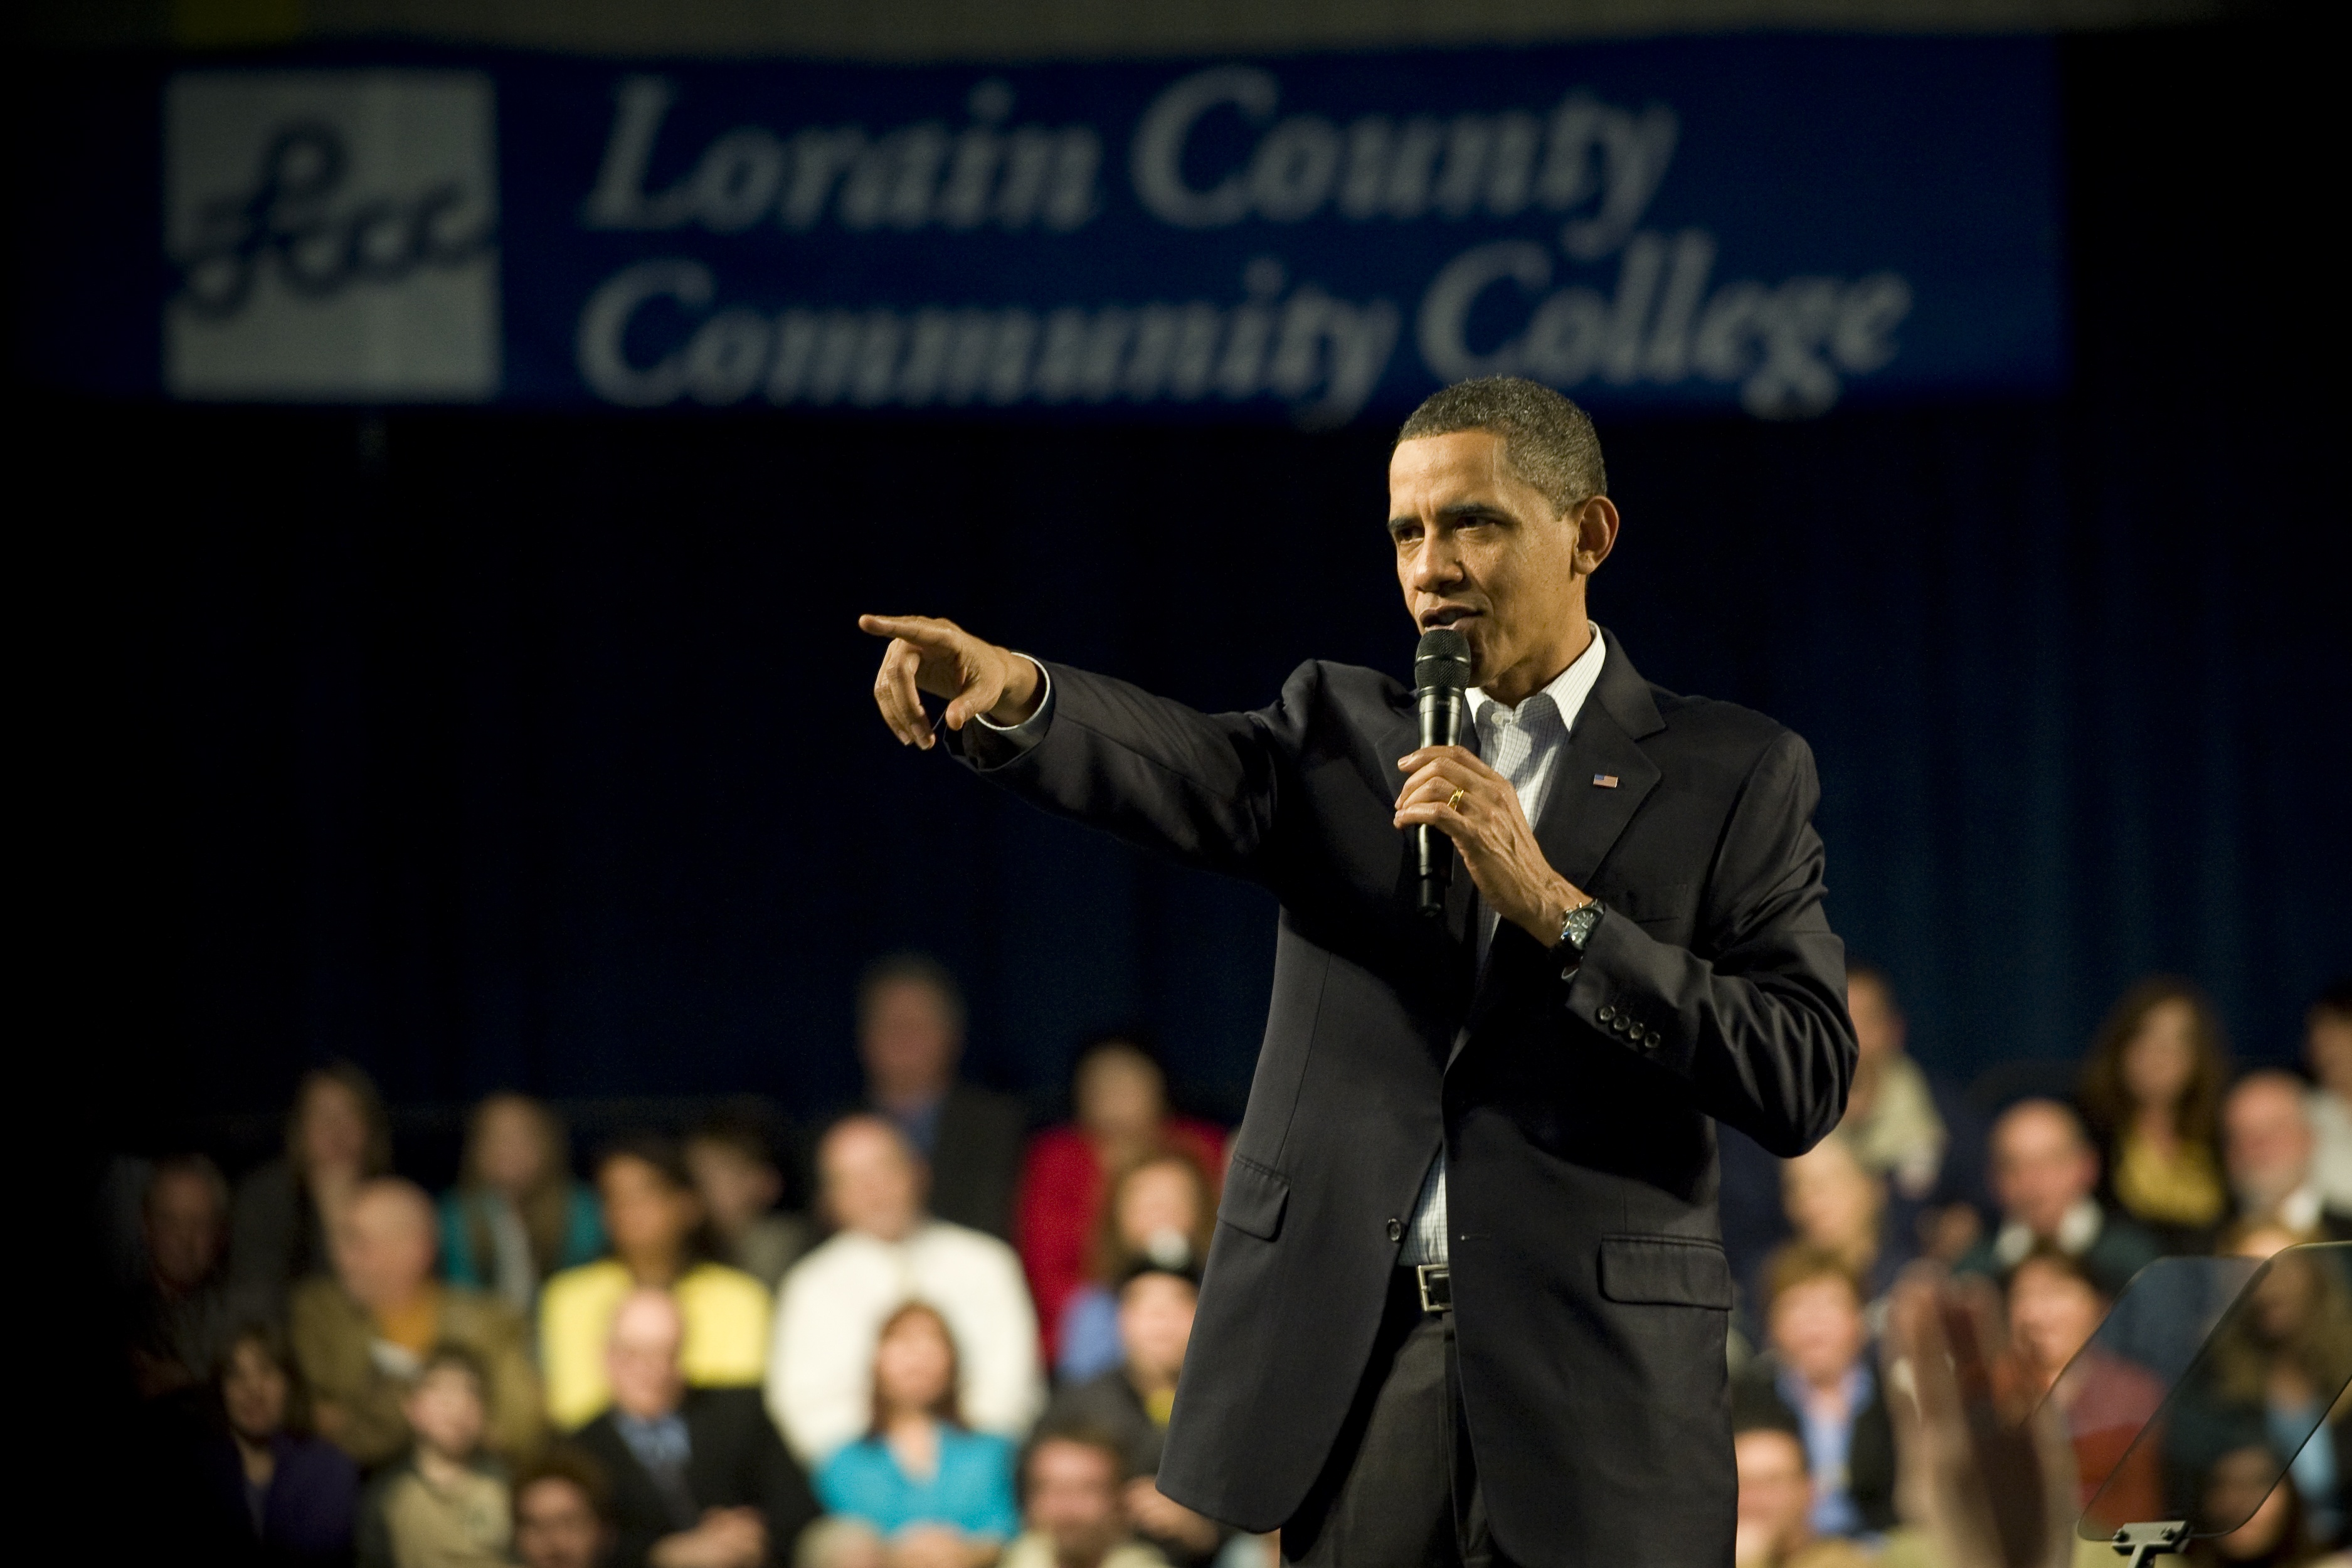 President Obama at Lorain Community College